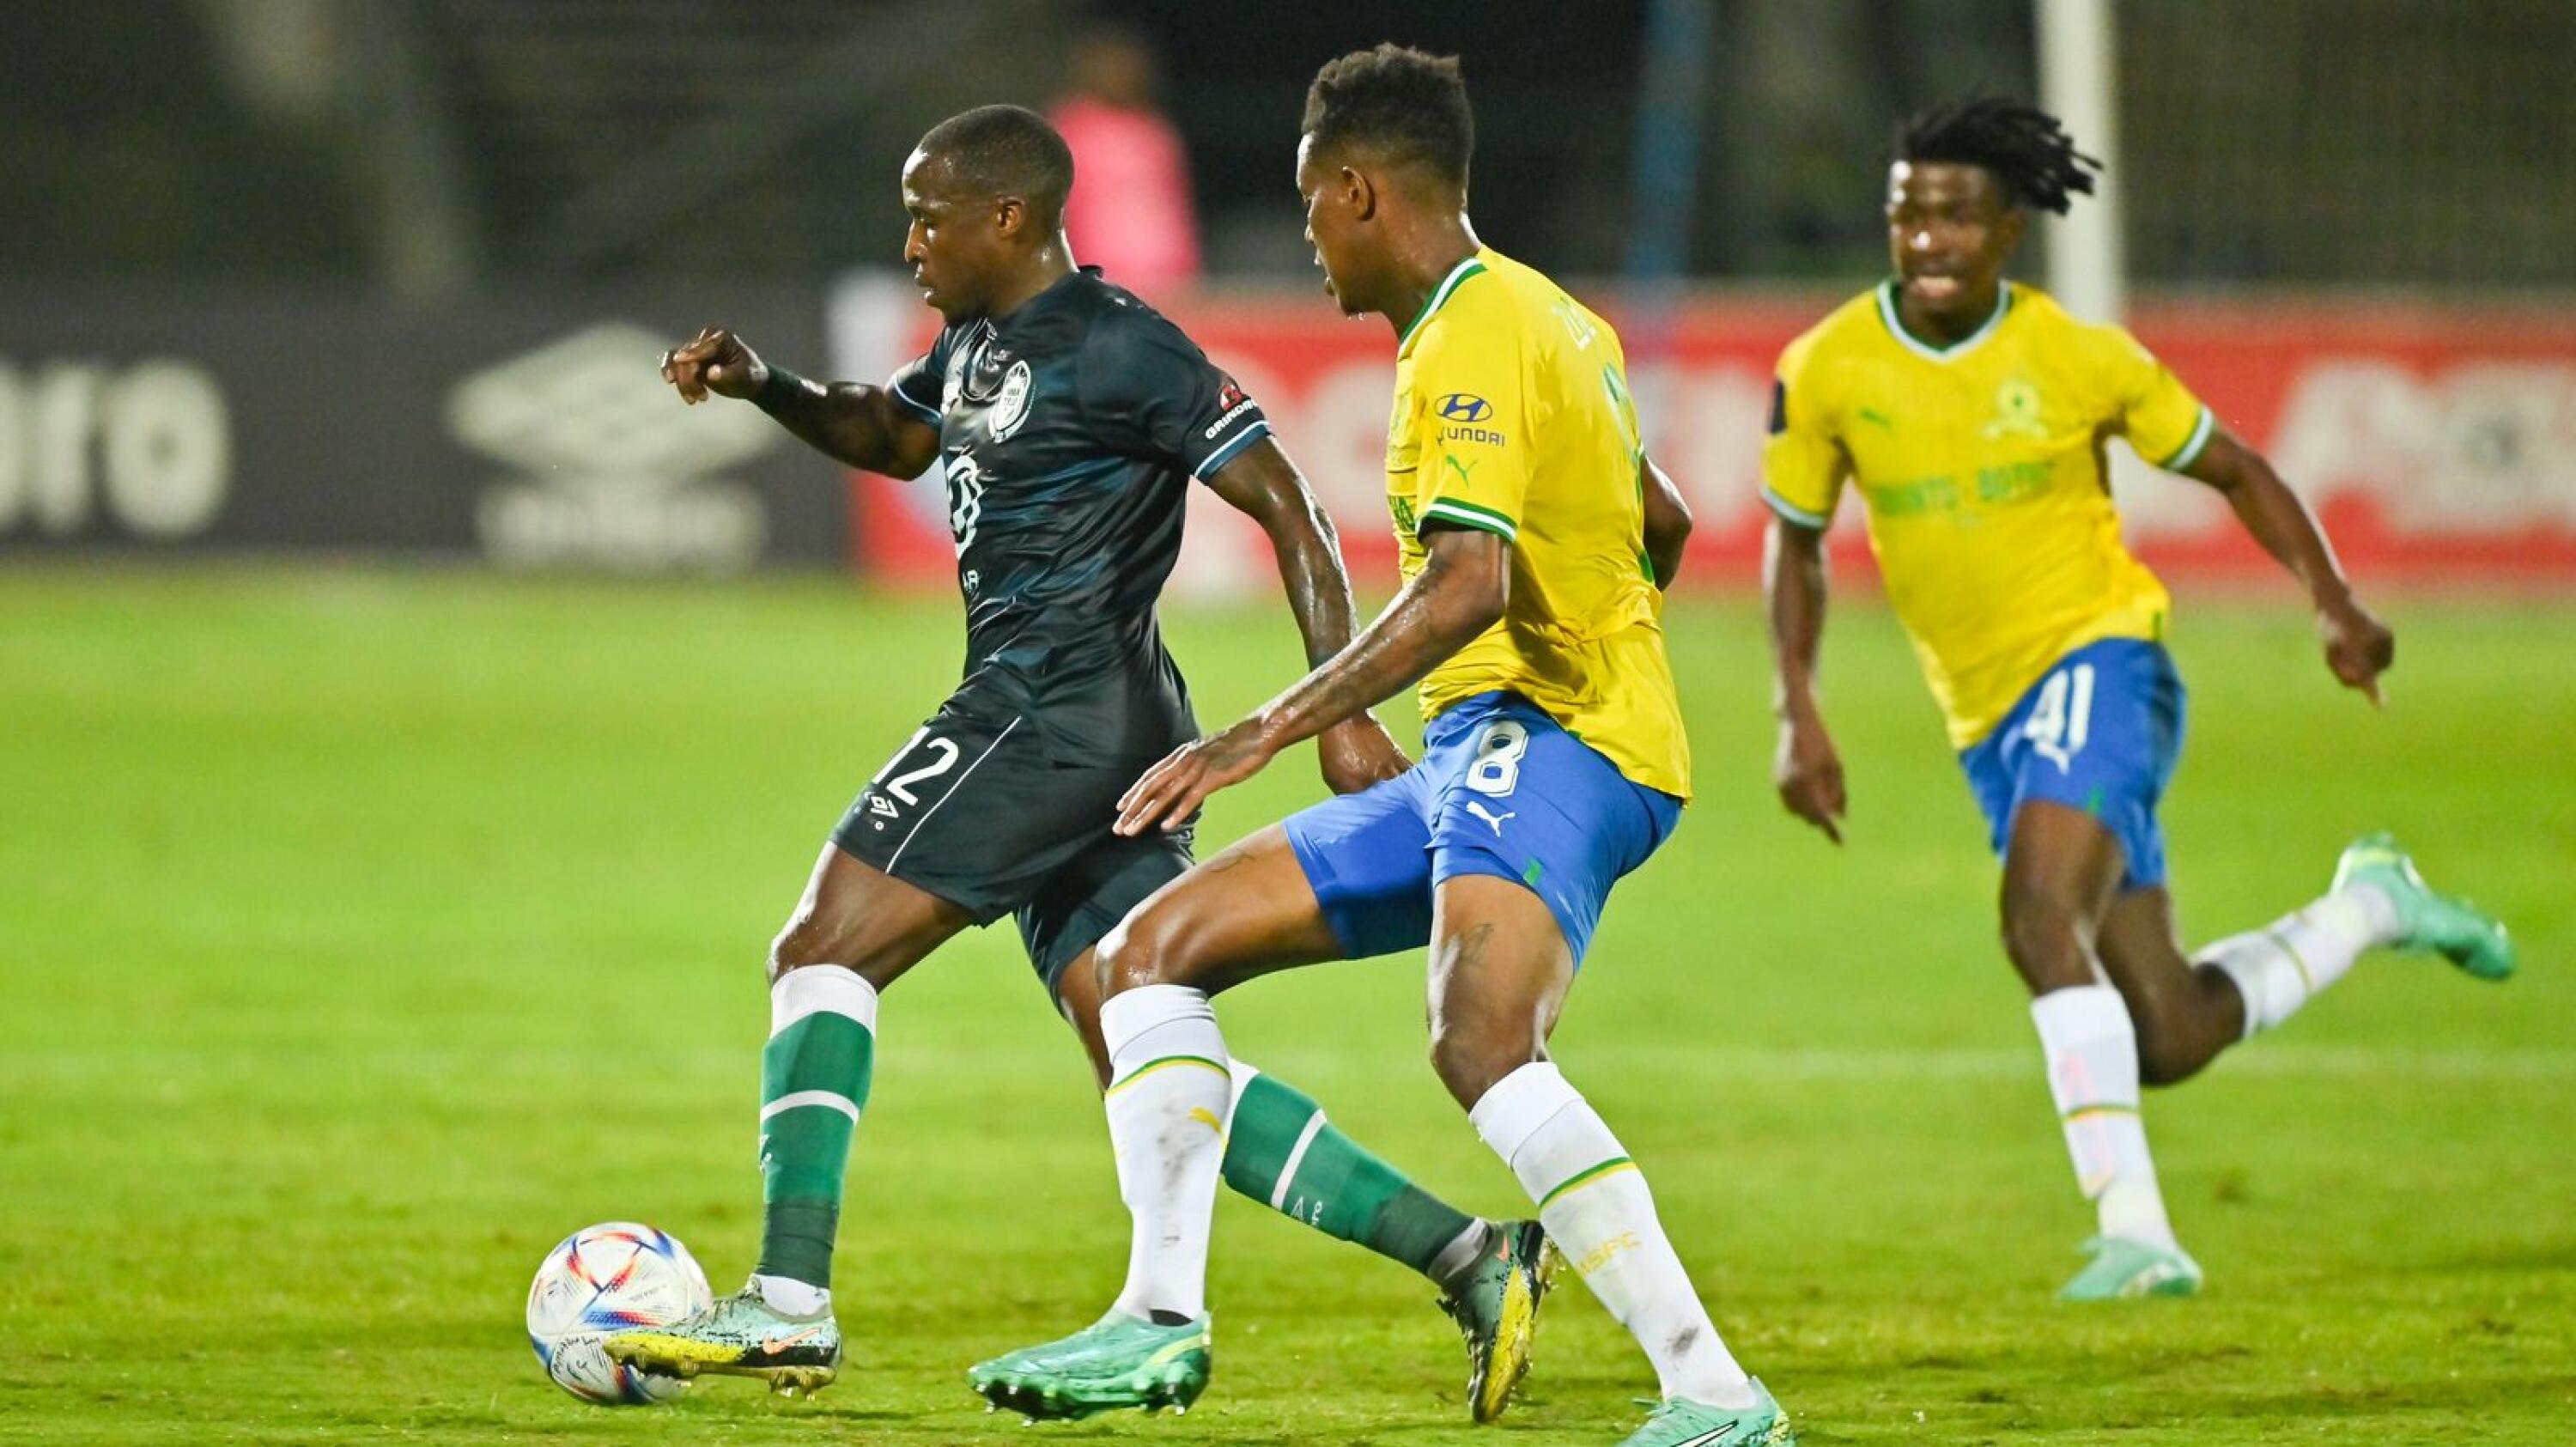 Bongani Zungu of Mamelodi Sundowns challenges George Maluleka of AmaZulu FC during their DStv Premiership game at Princess Magogo Stadium in Durban on Wednesday